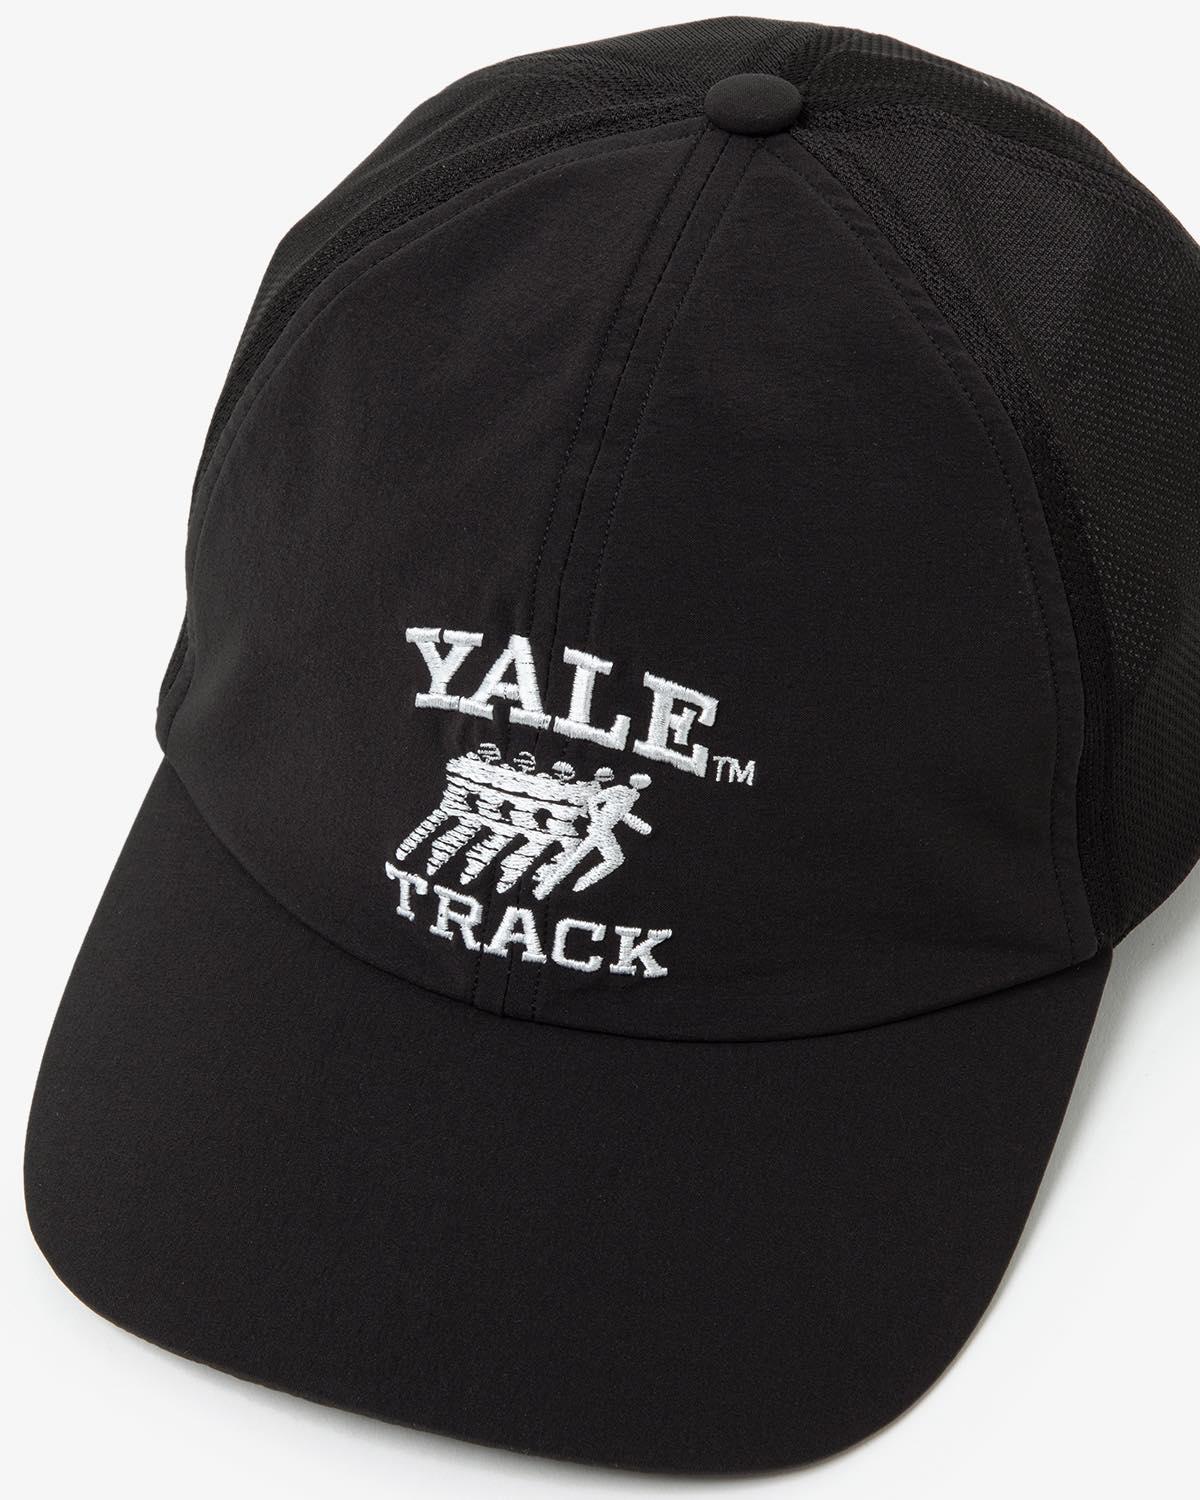 YALE TRACK MESH CAP